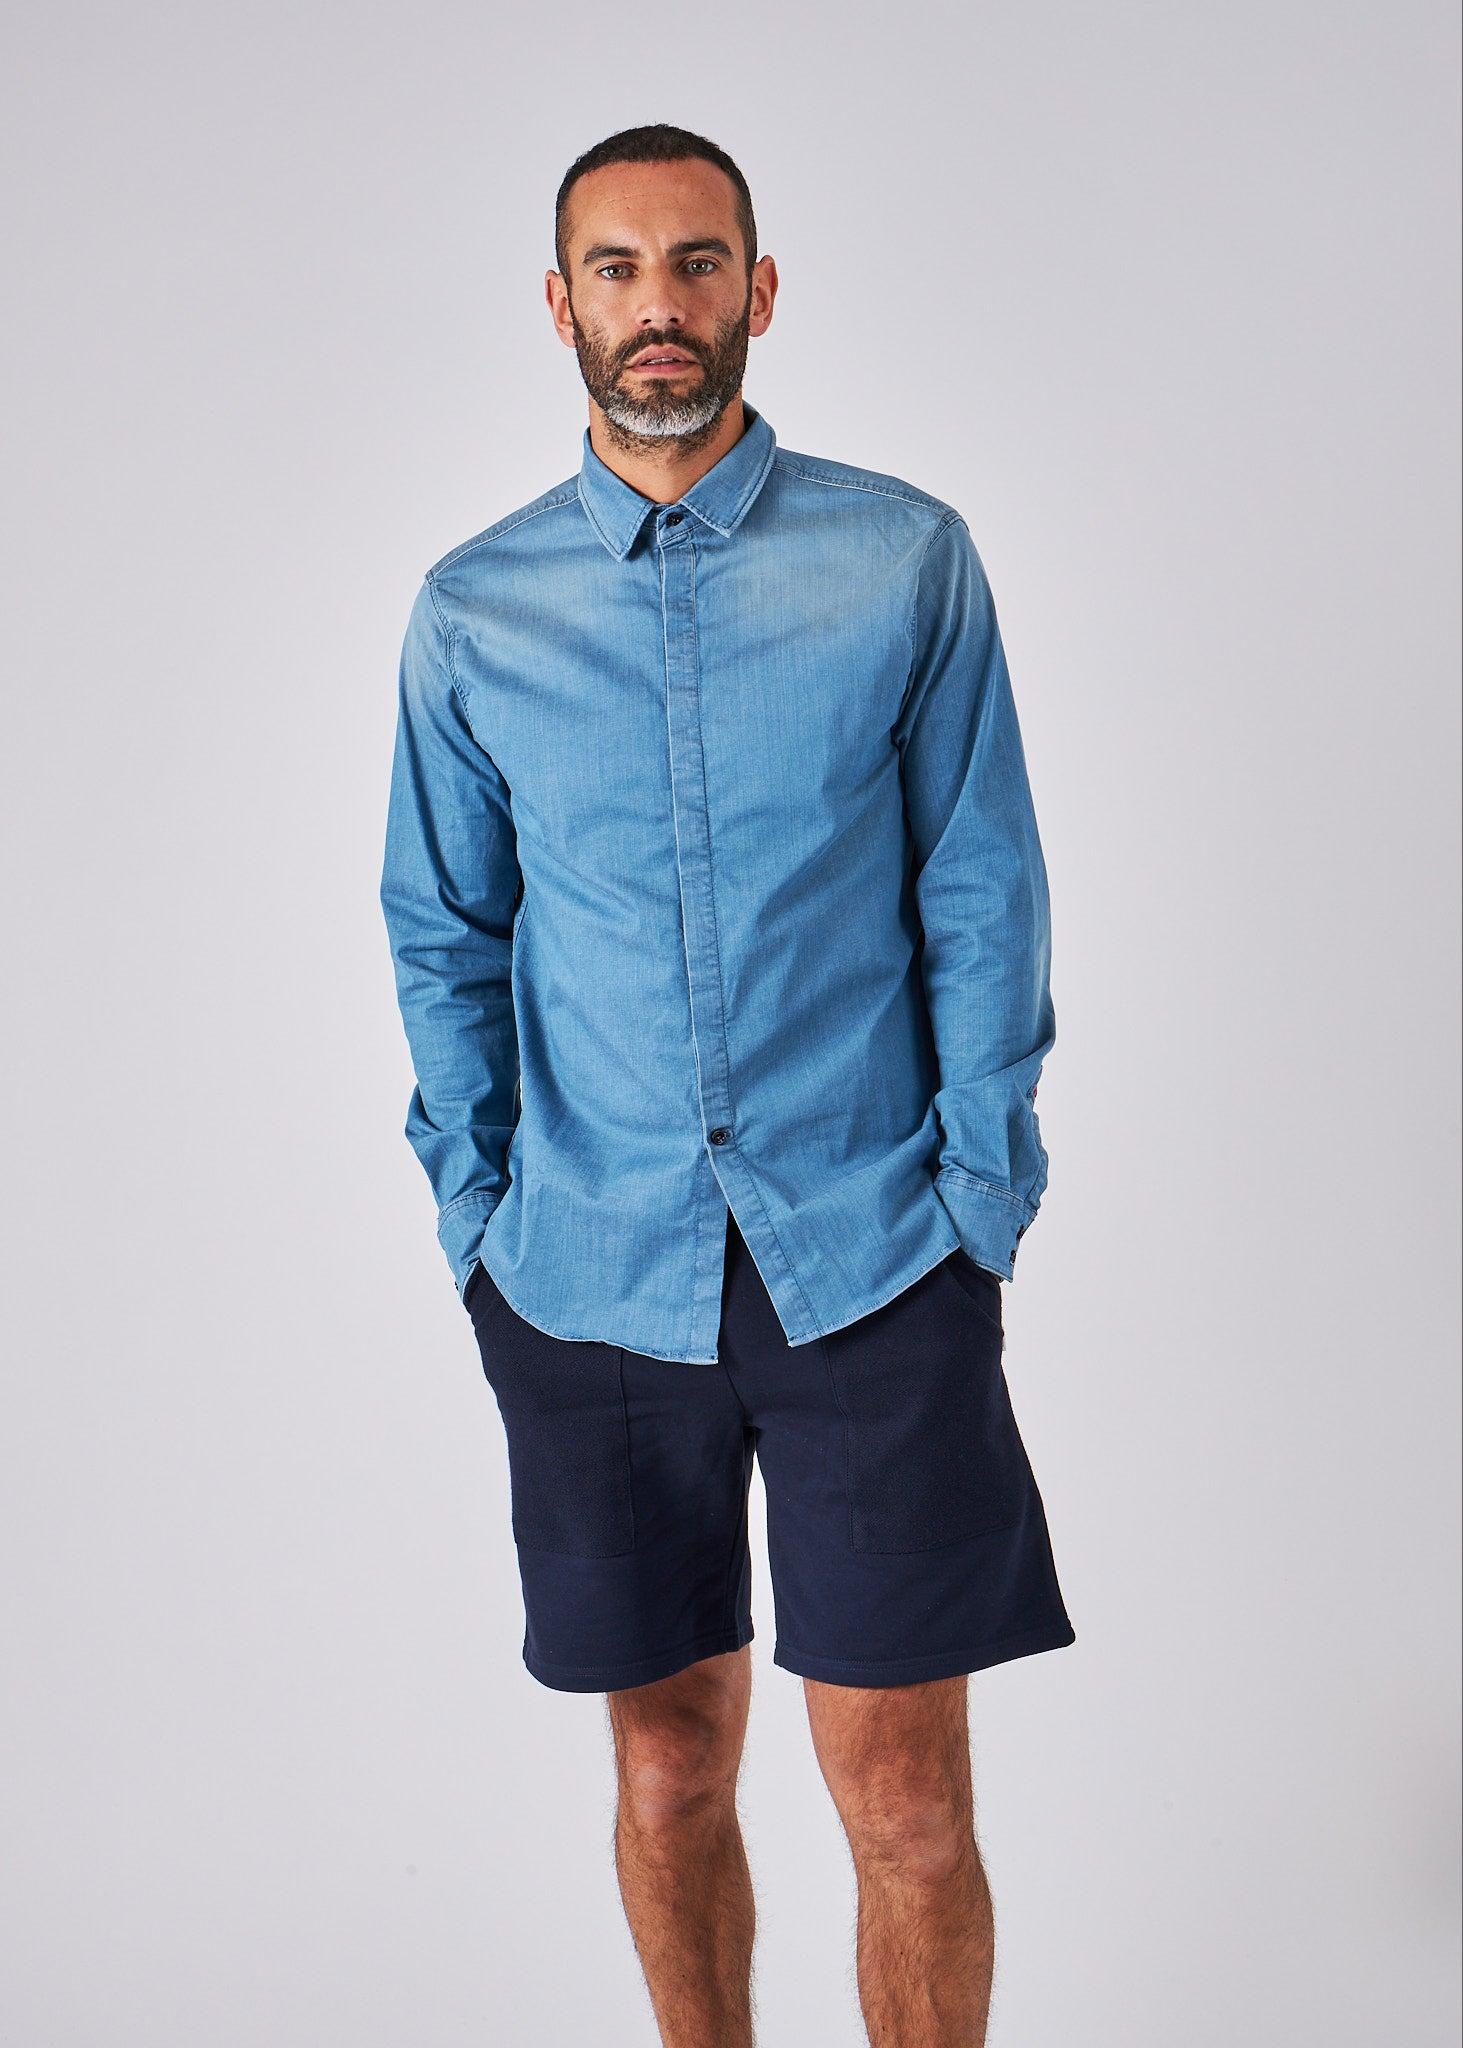 Replay Hyperflex Denim Shirt in Blue for Men | Lyst